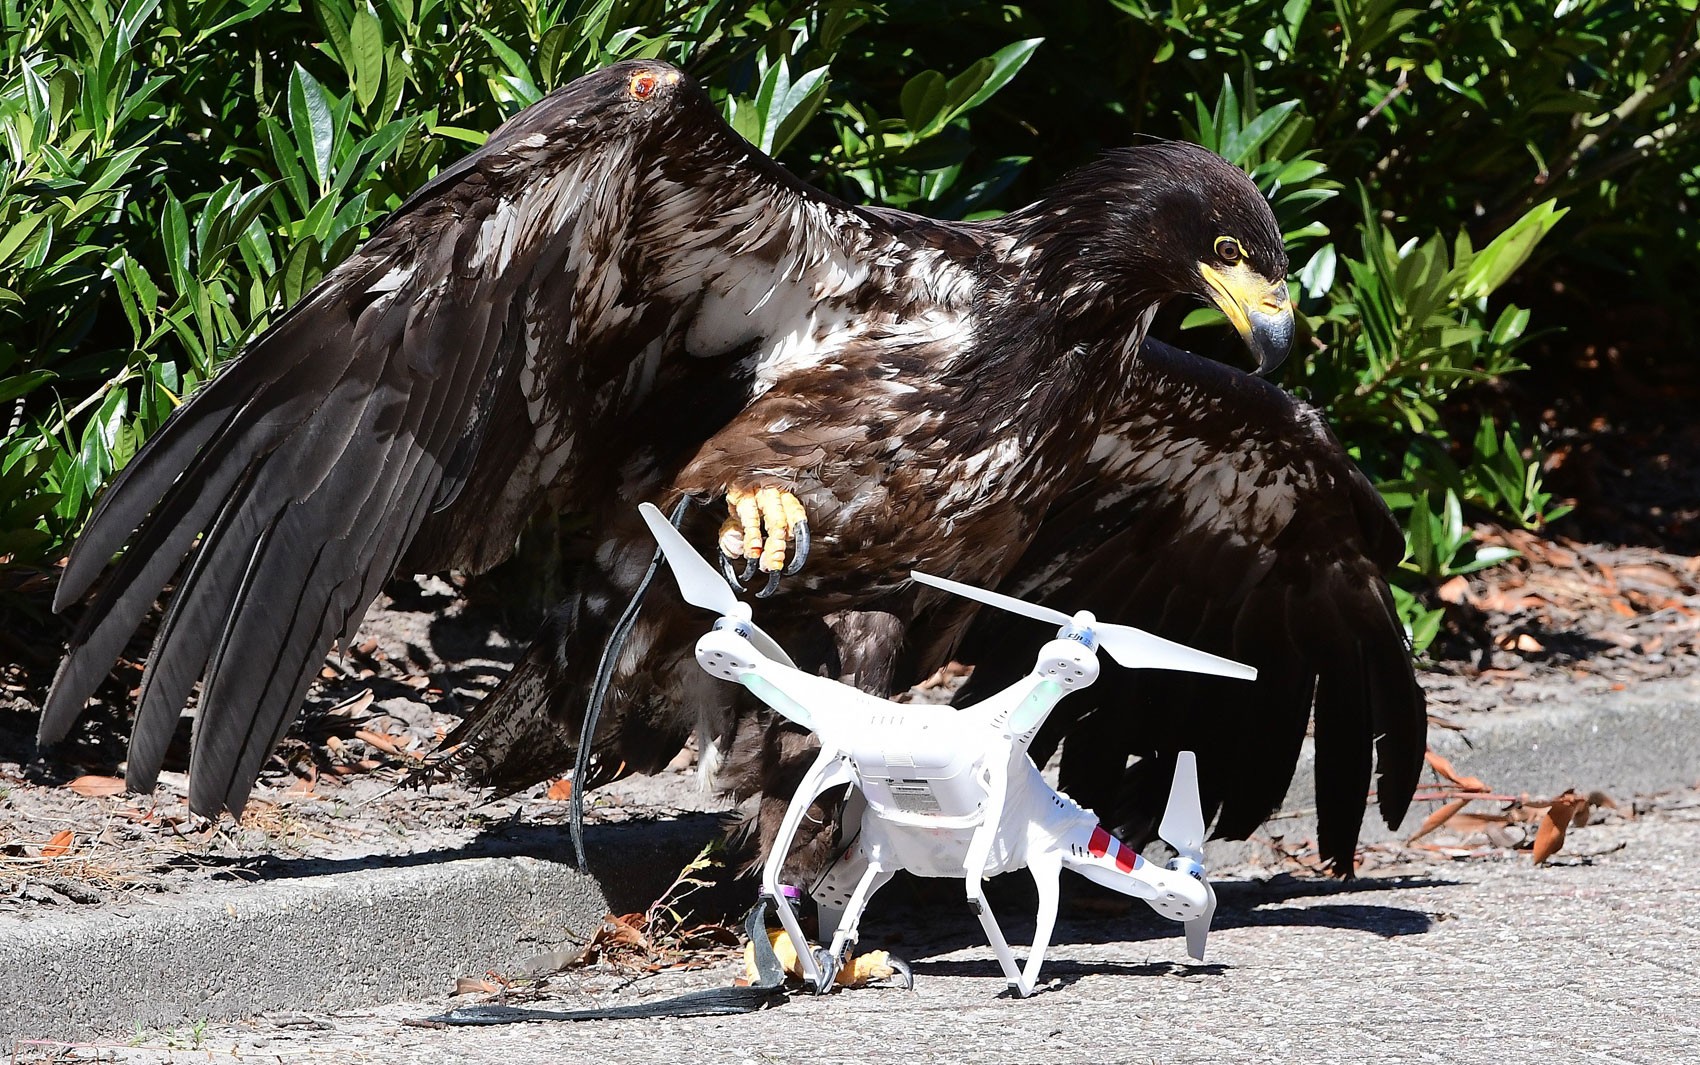 Polícia holandesa utiliza águias para capturar drones